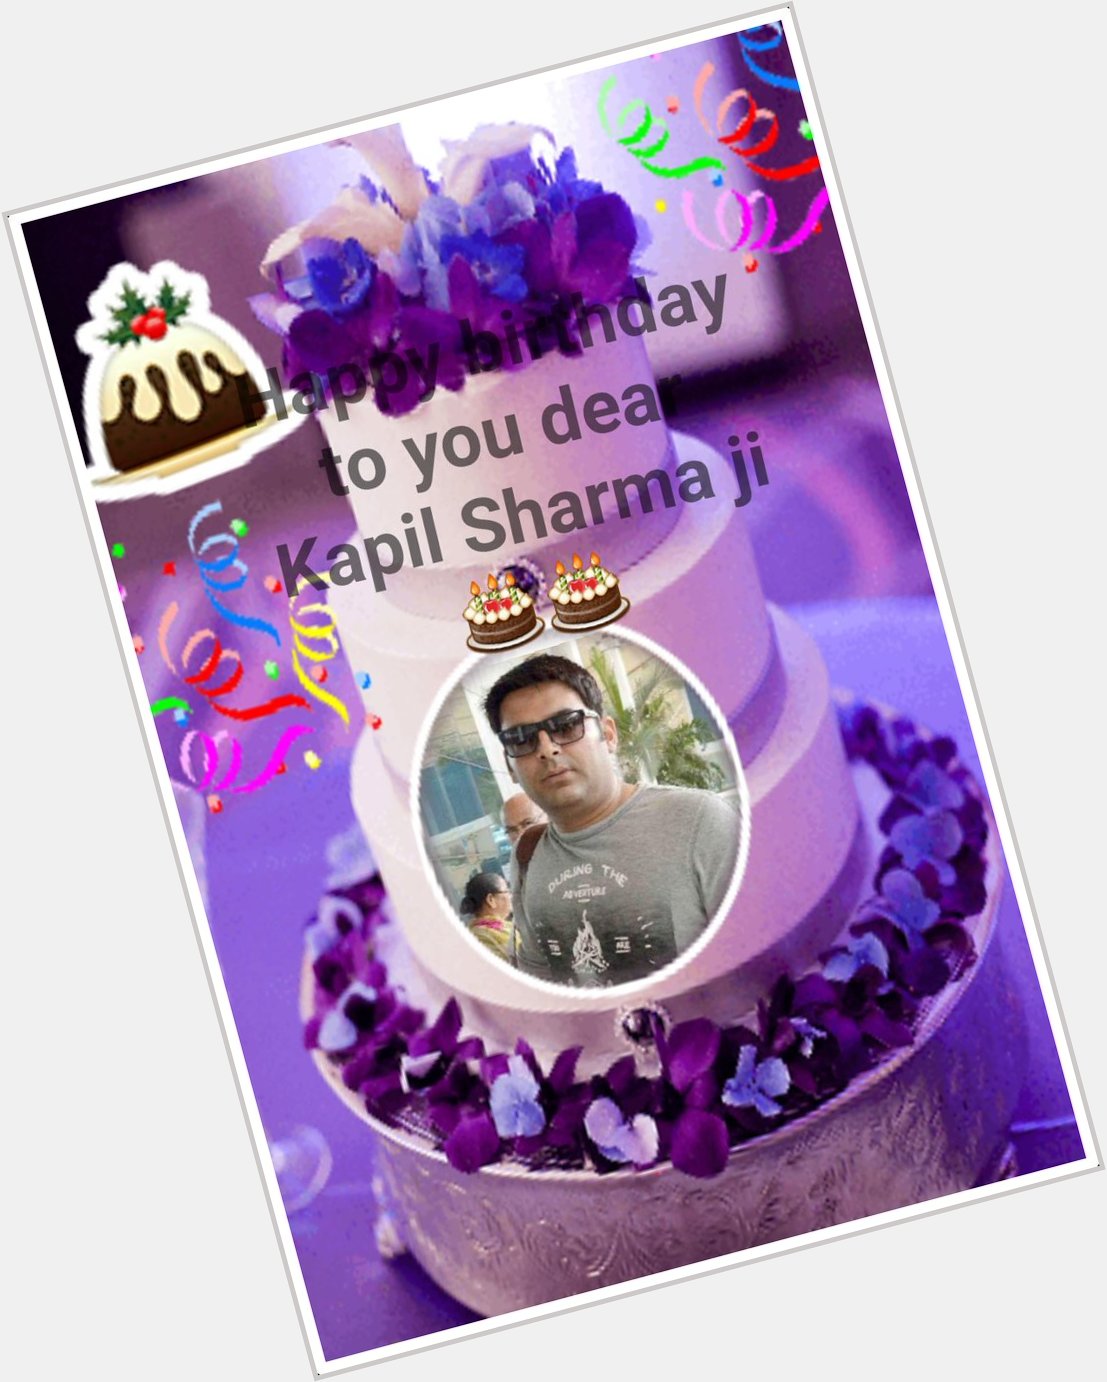   Happy birthday dear Kapil Sharma ji  